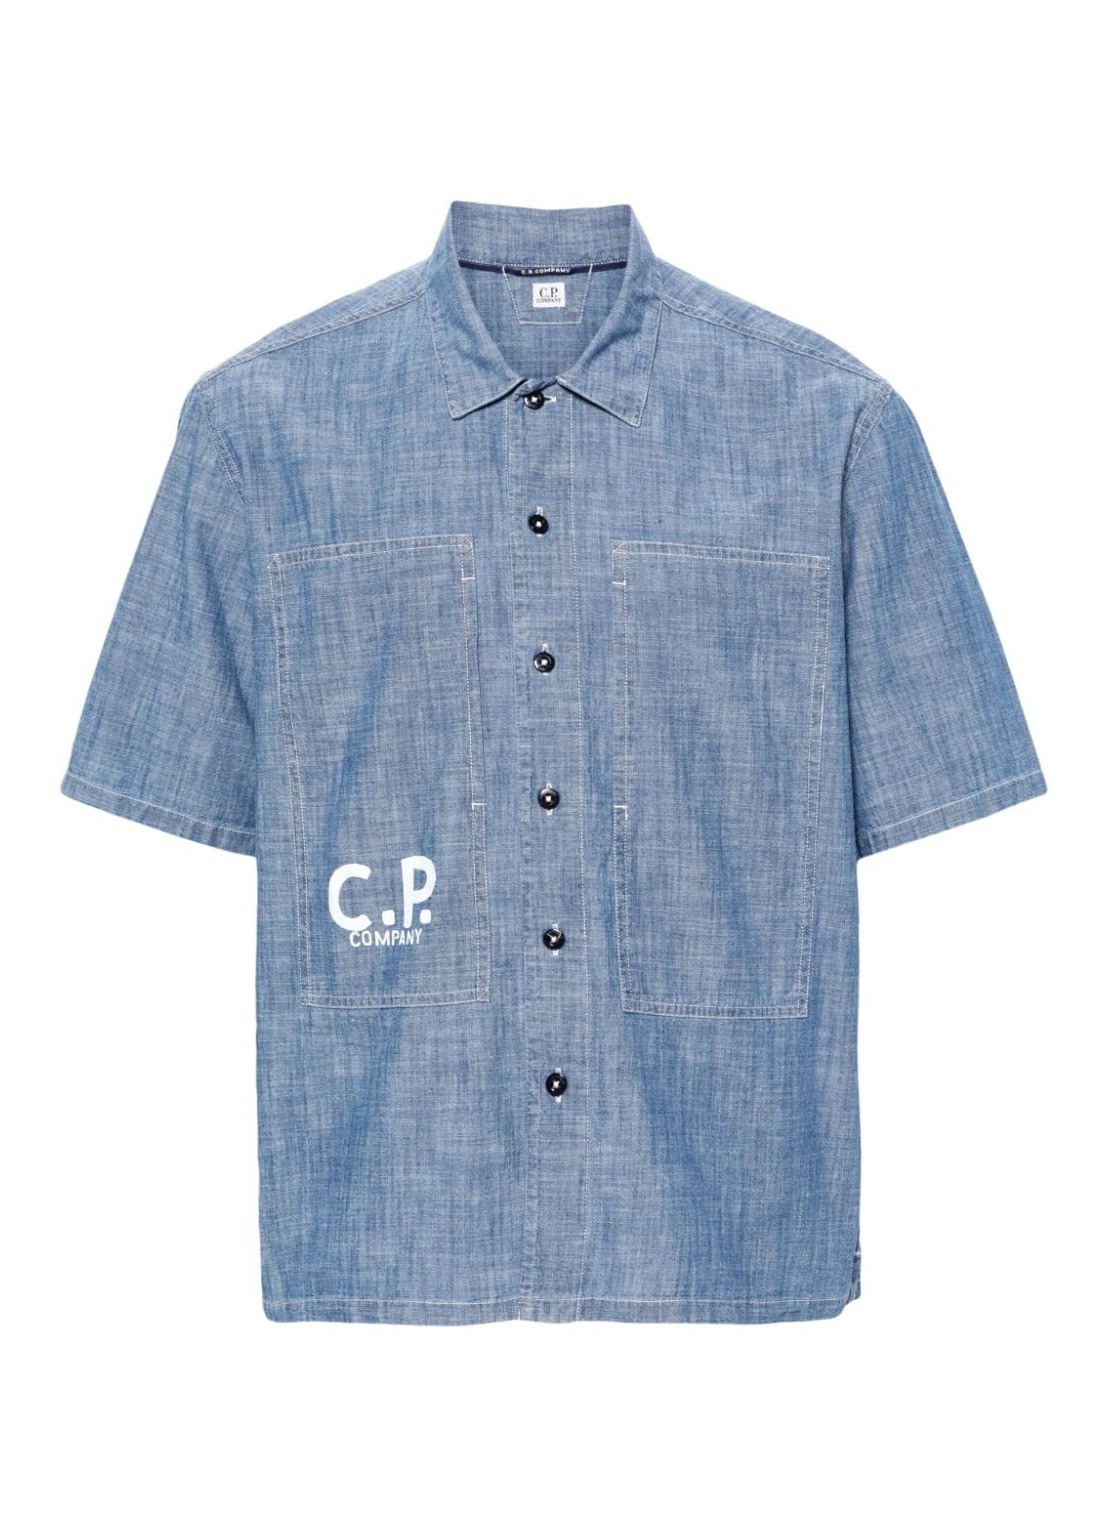 Camiseria c.p.company shirt manchambray short sleeved logo shirt - 16cmsh149a110065w d11 talla Azul
